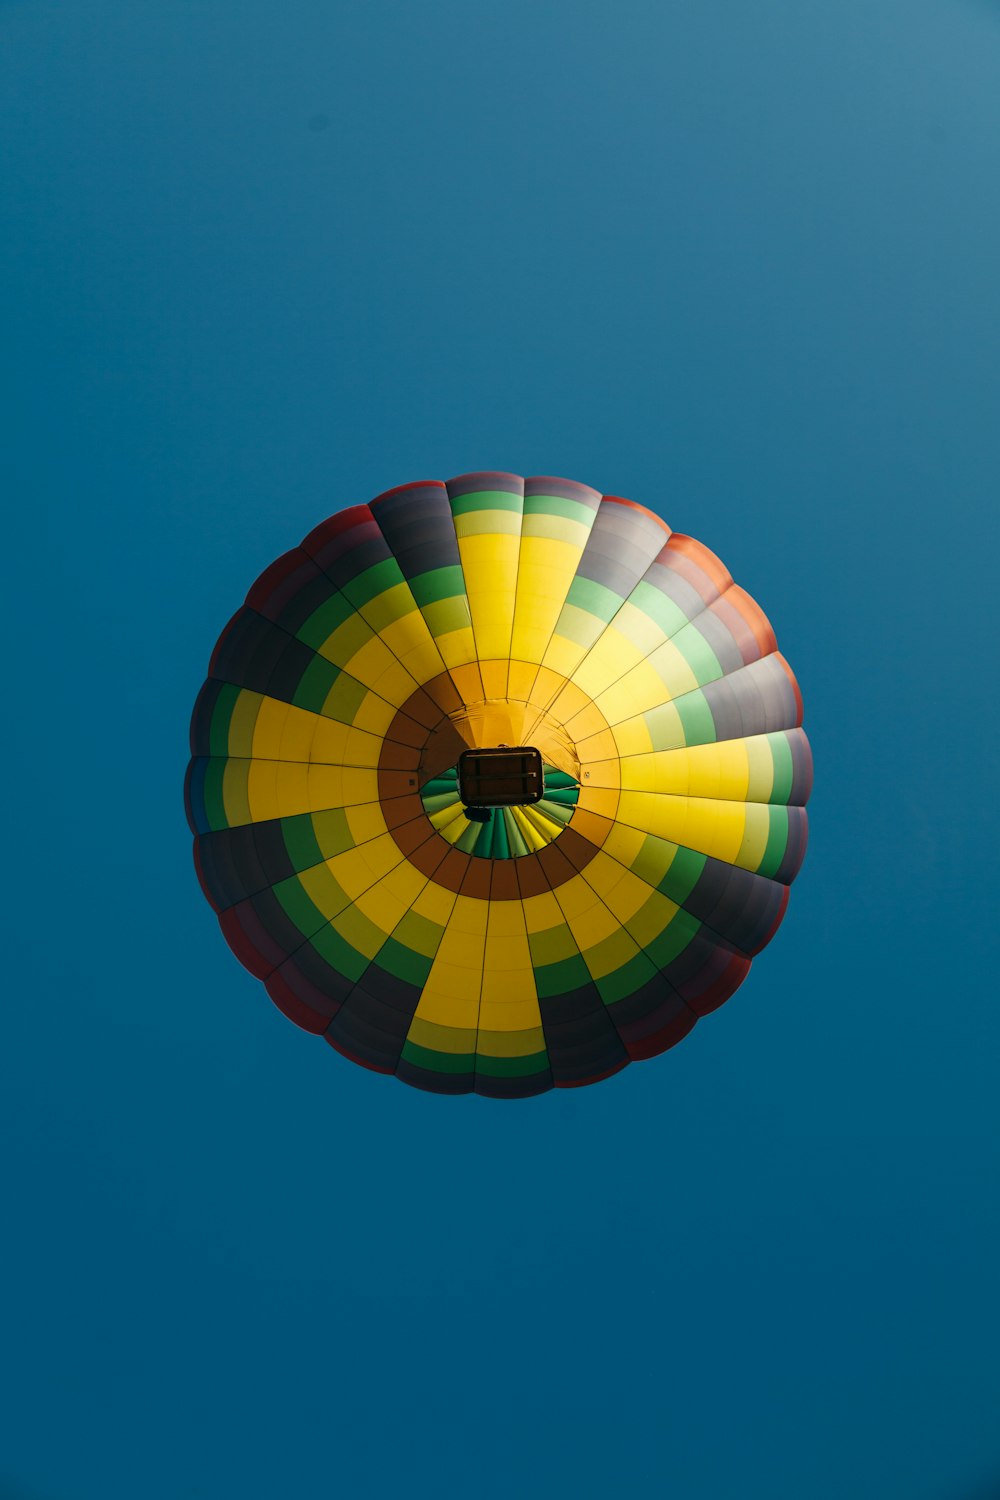 globo aerostático flotante amarillo, negro y naranja